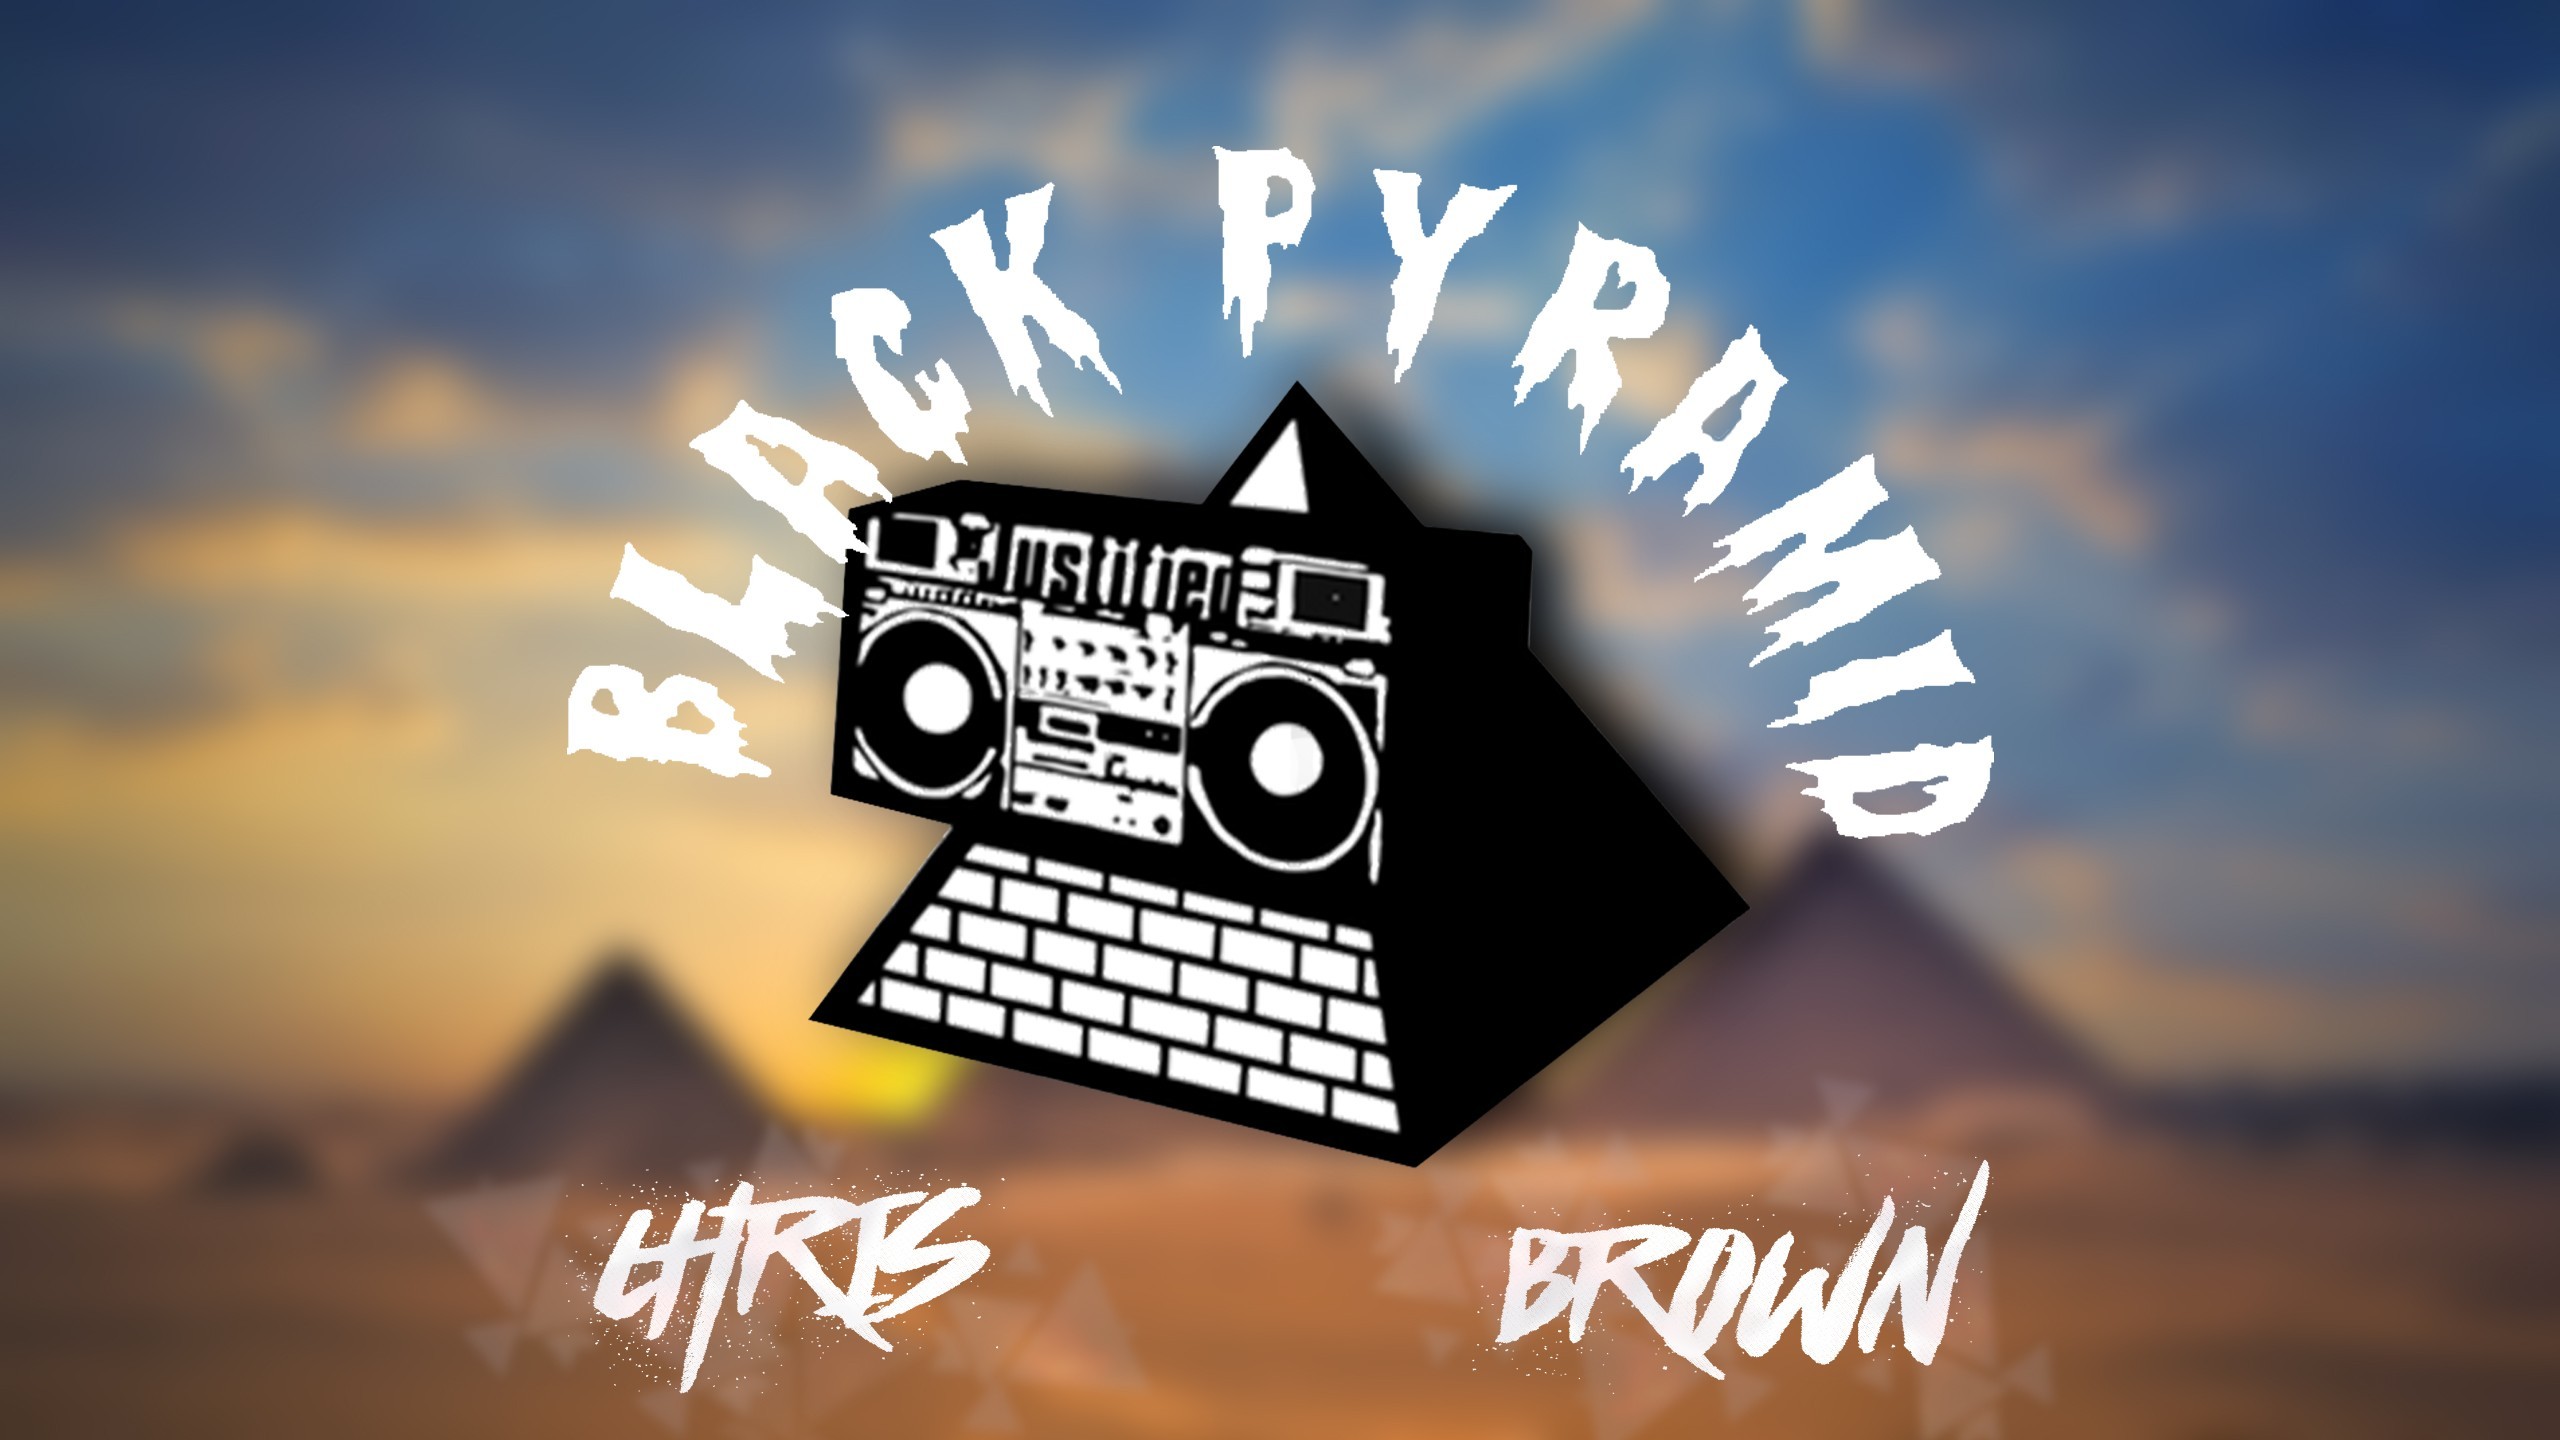 2560x1440 General  black pyramid chris brown breezy